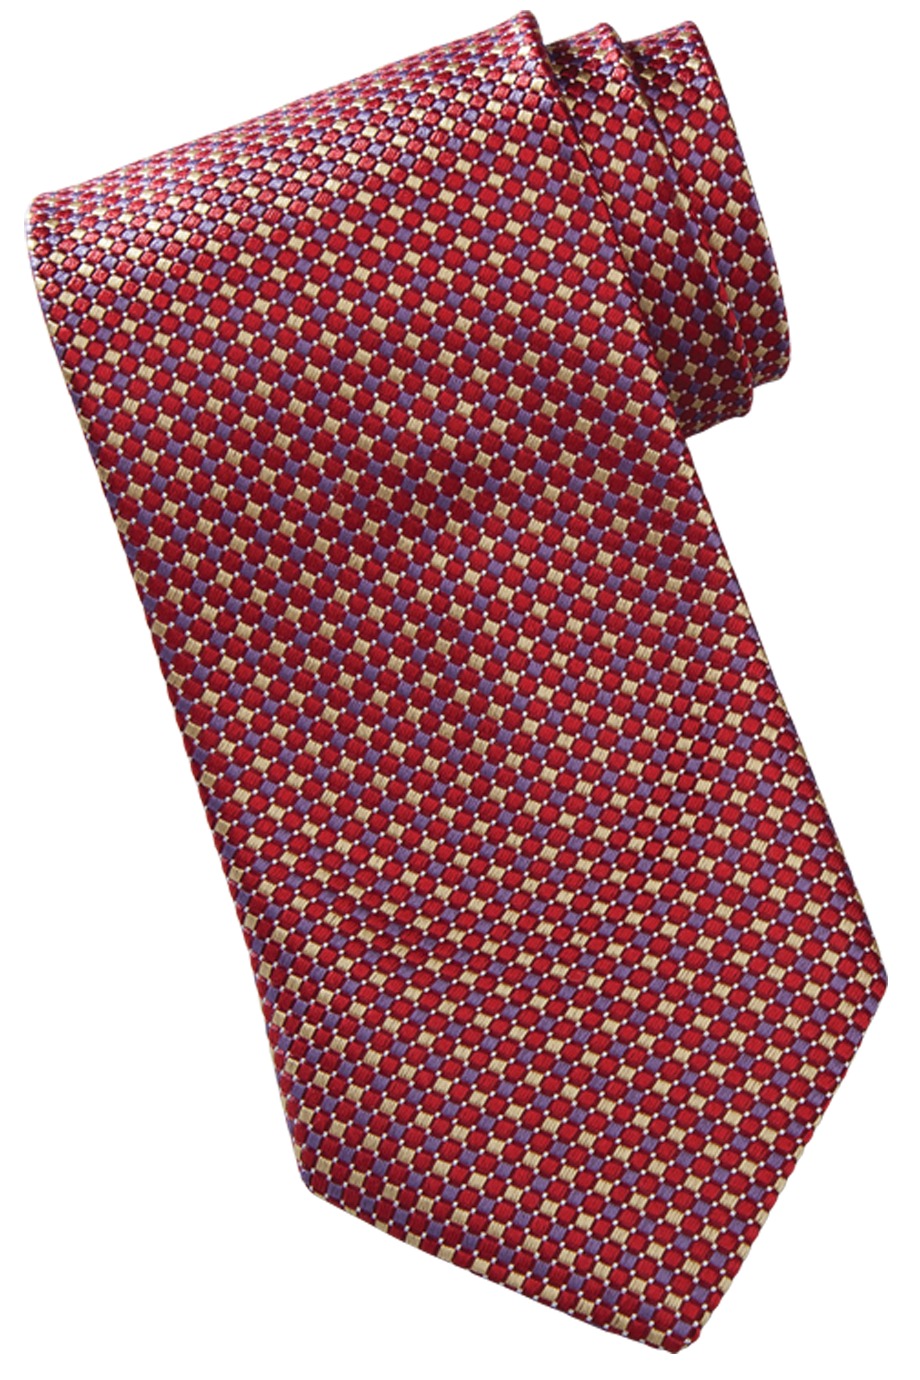 Edwards Garment MD00 - Men's Mini-Diamond Pattern Tie